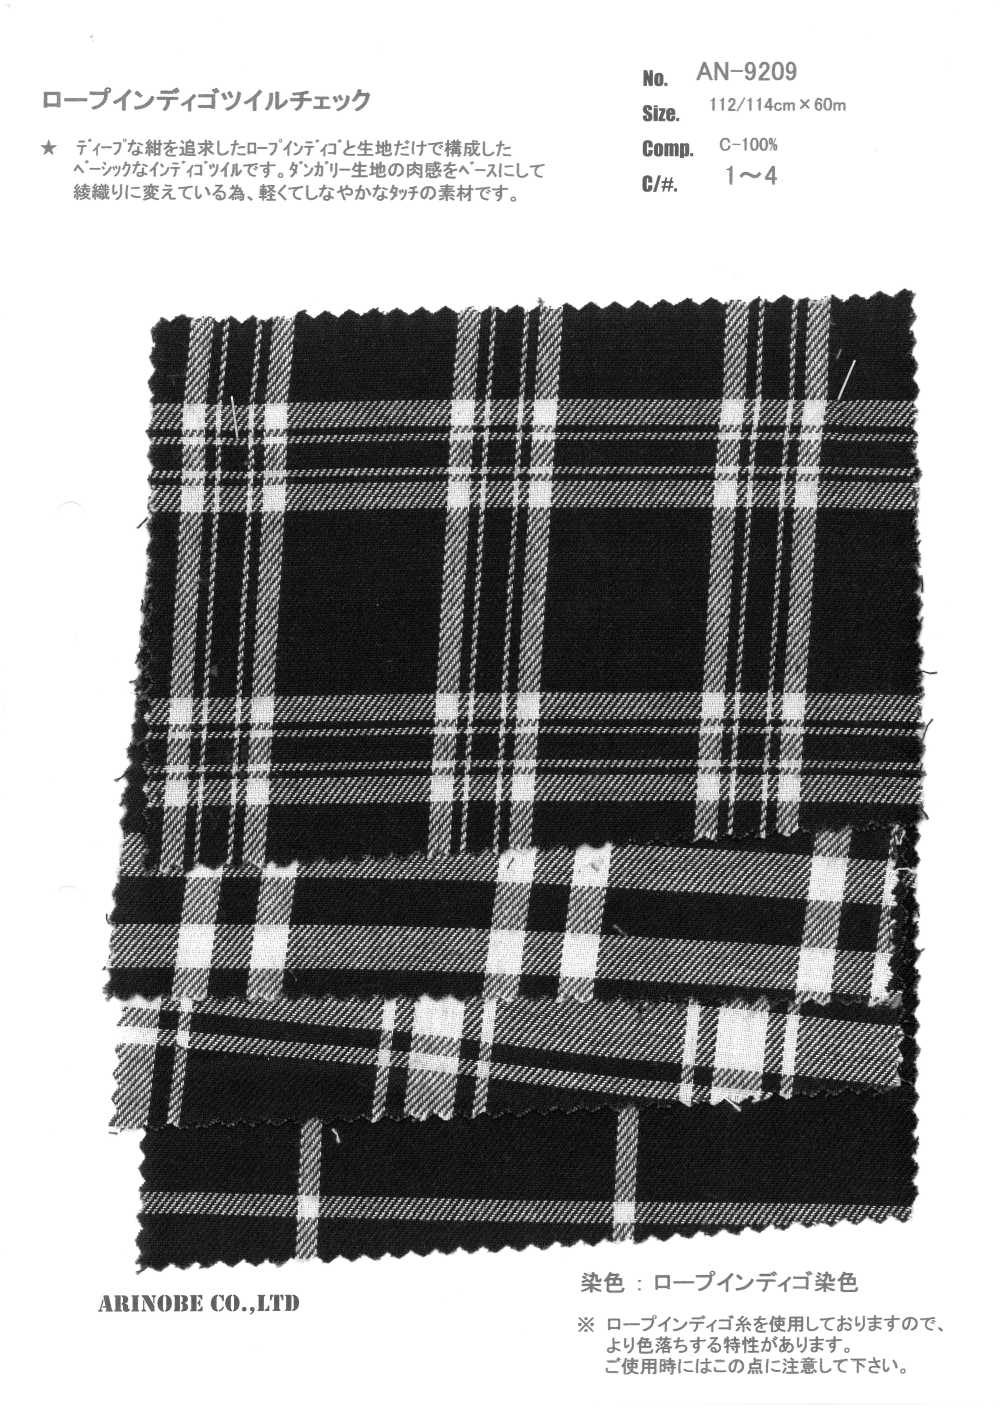 AN-9209 Kordel-Indigo-Twill-Karo[Textilgewebe] ARINOBE CO., LTD.